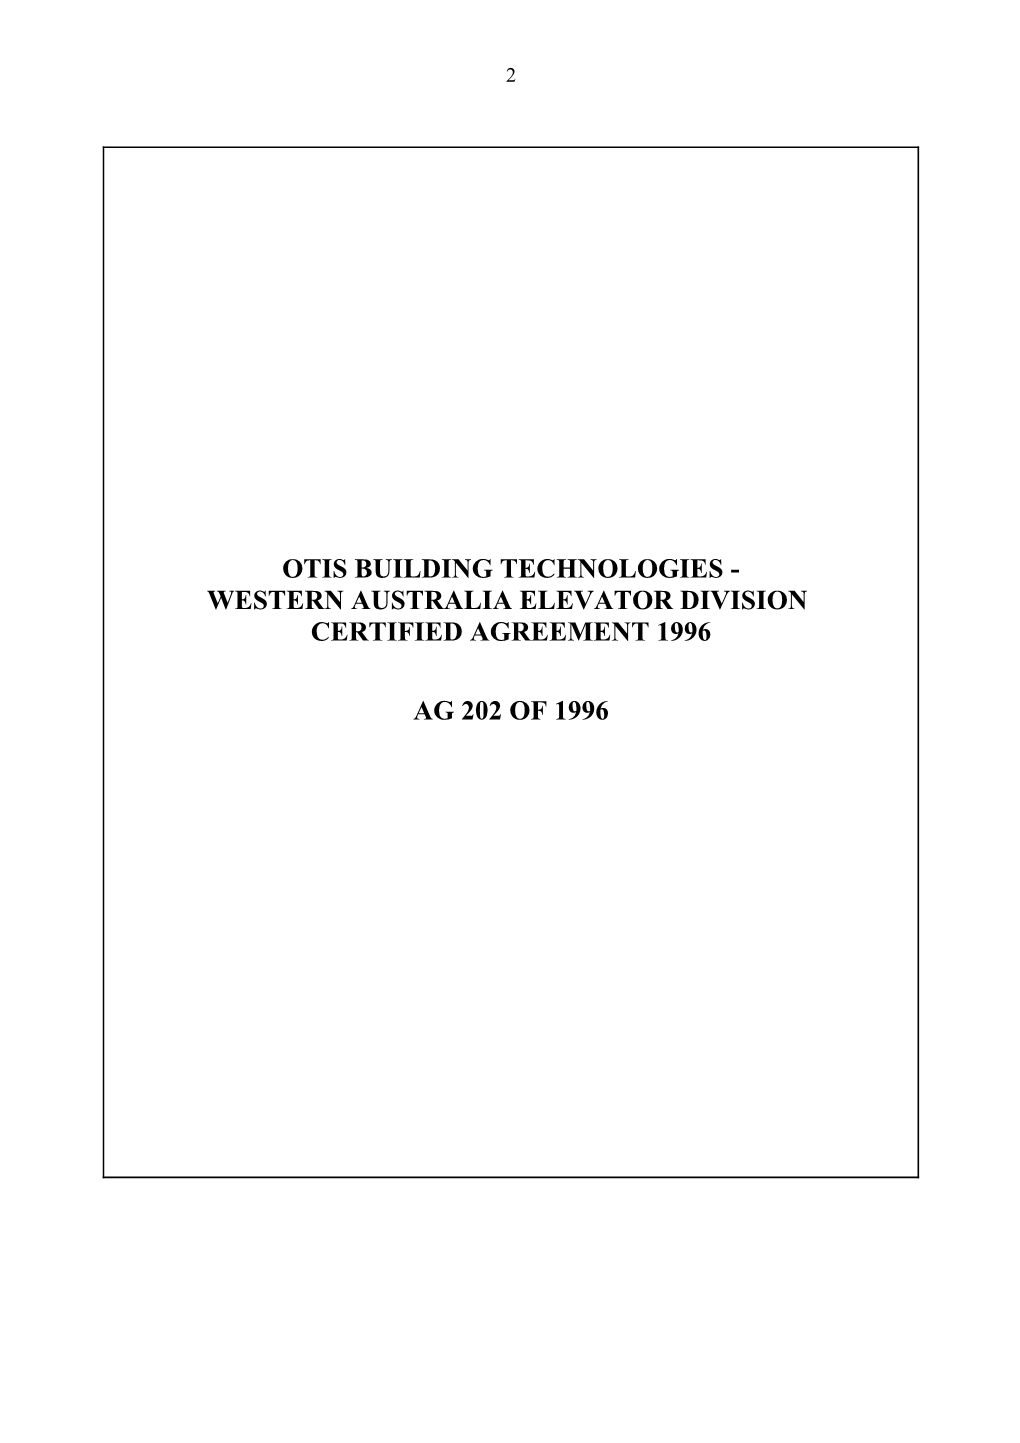 Otis Building Technologies - Western Australia Elevator Division Certified Agreement 1996